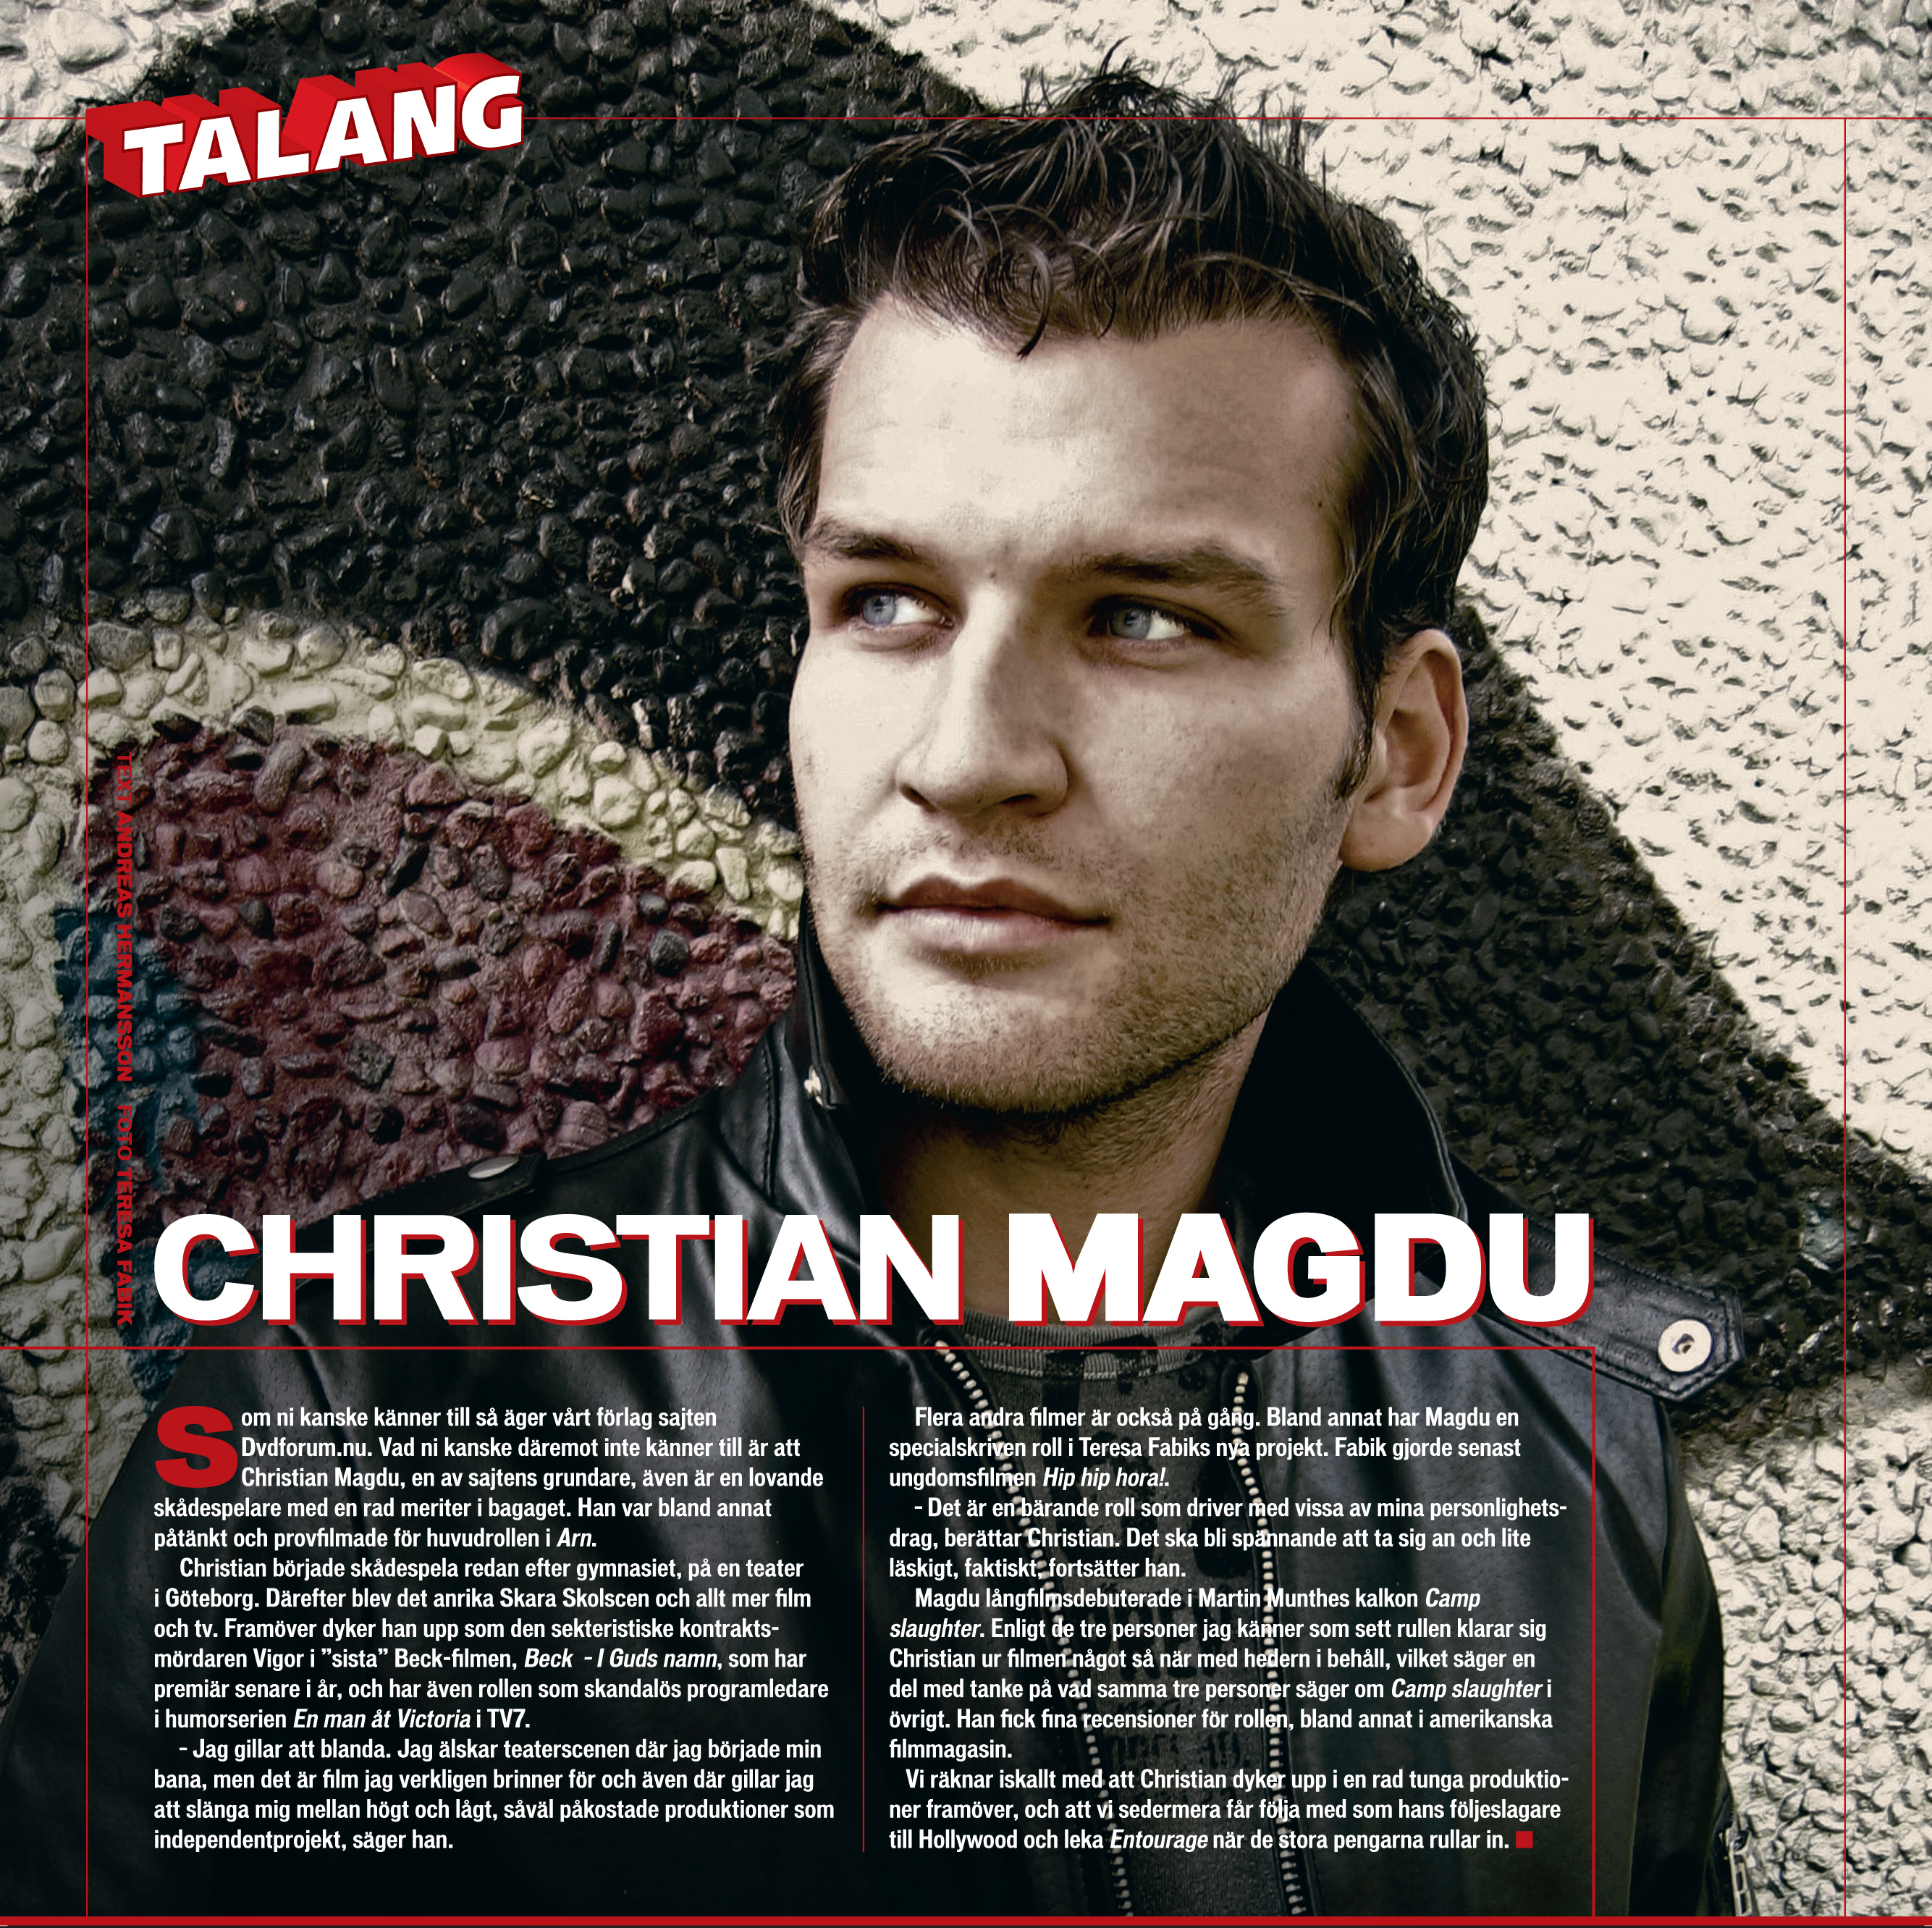 Christian Magdu as featured TALENT in Swedish Film Magazine Stardust / Allt om Film (2007).